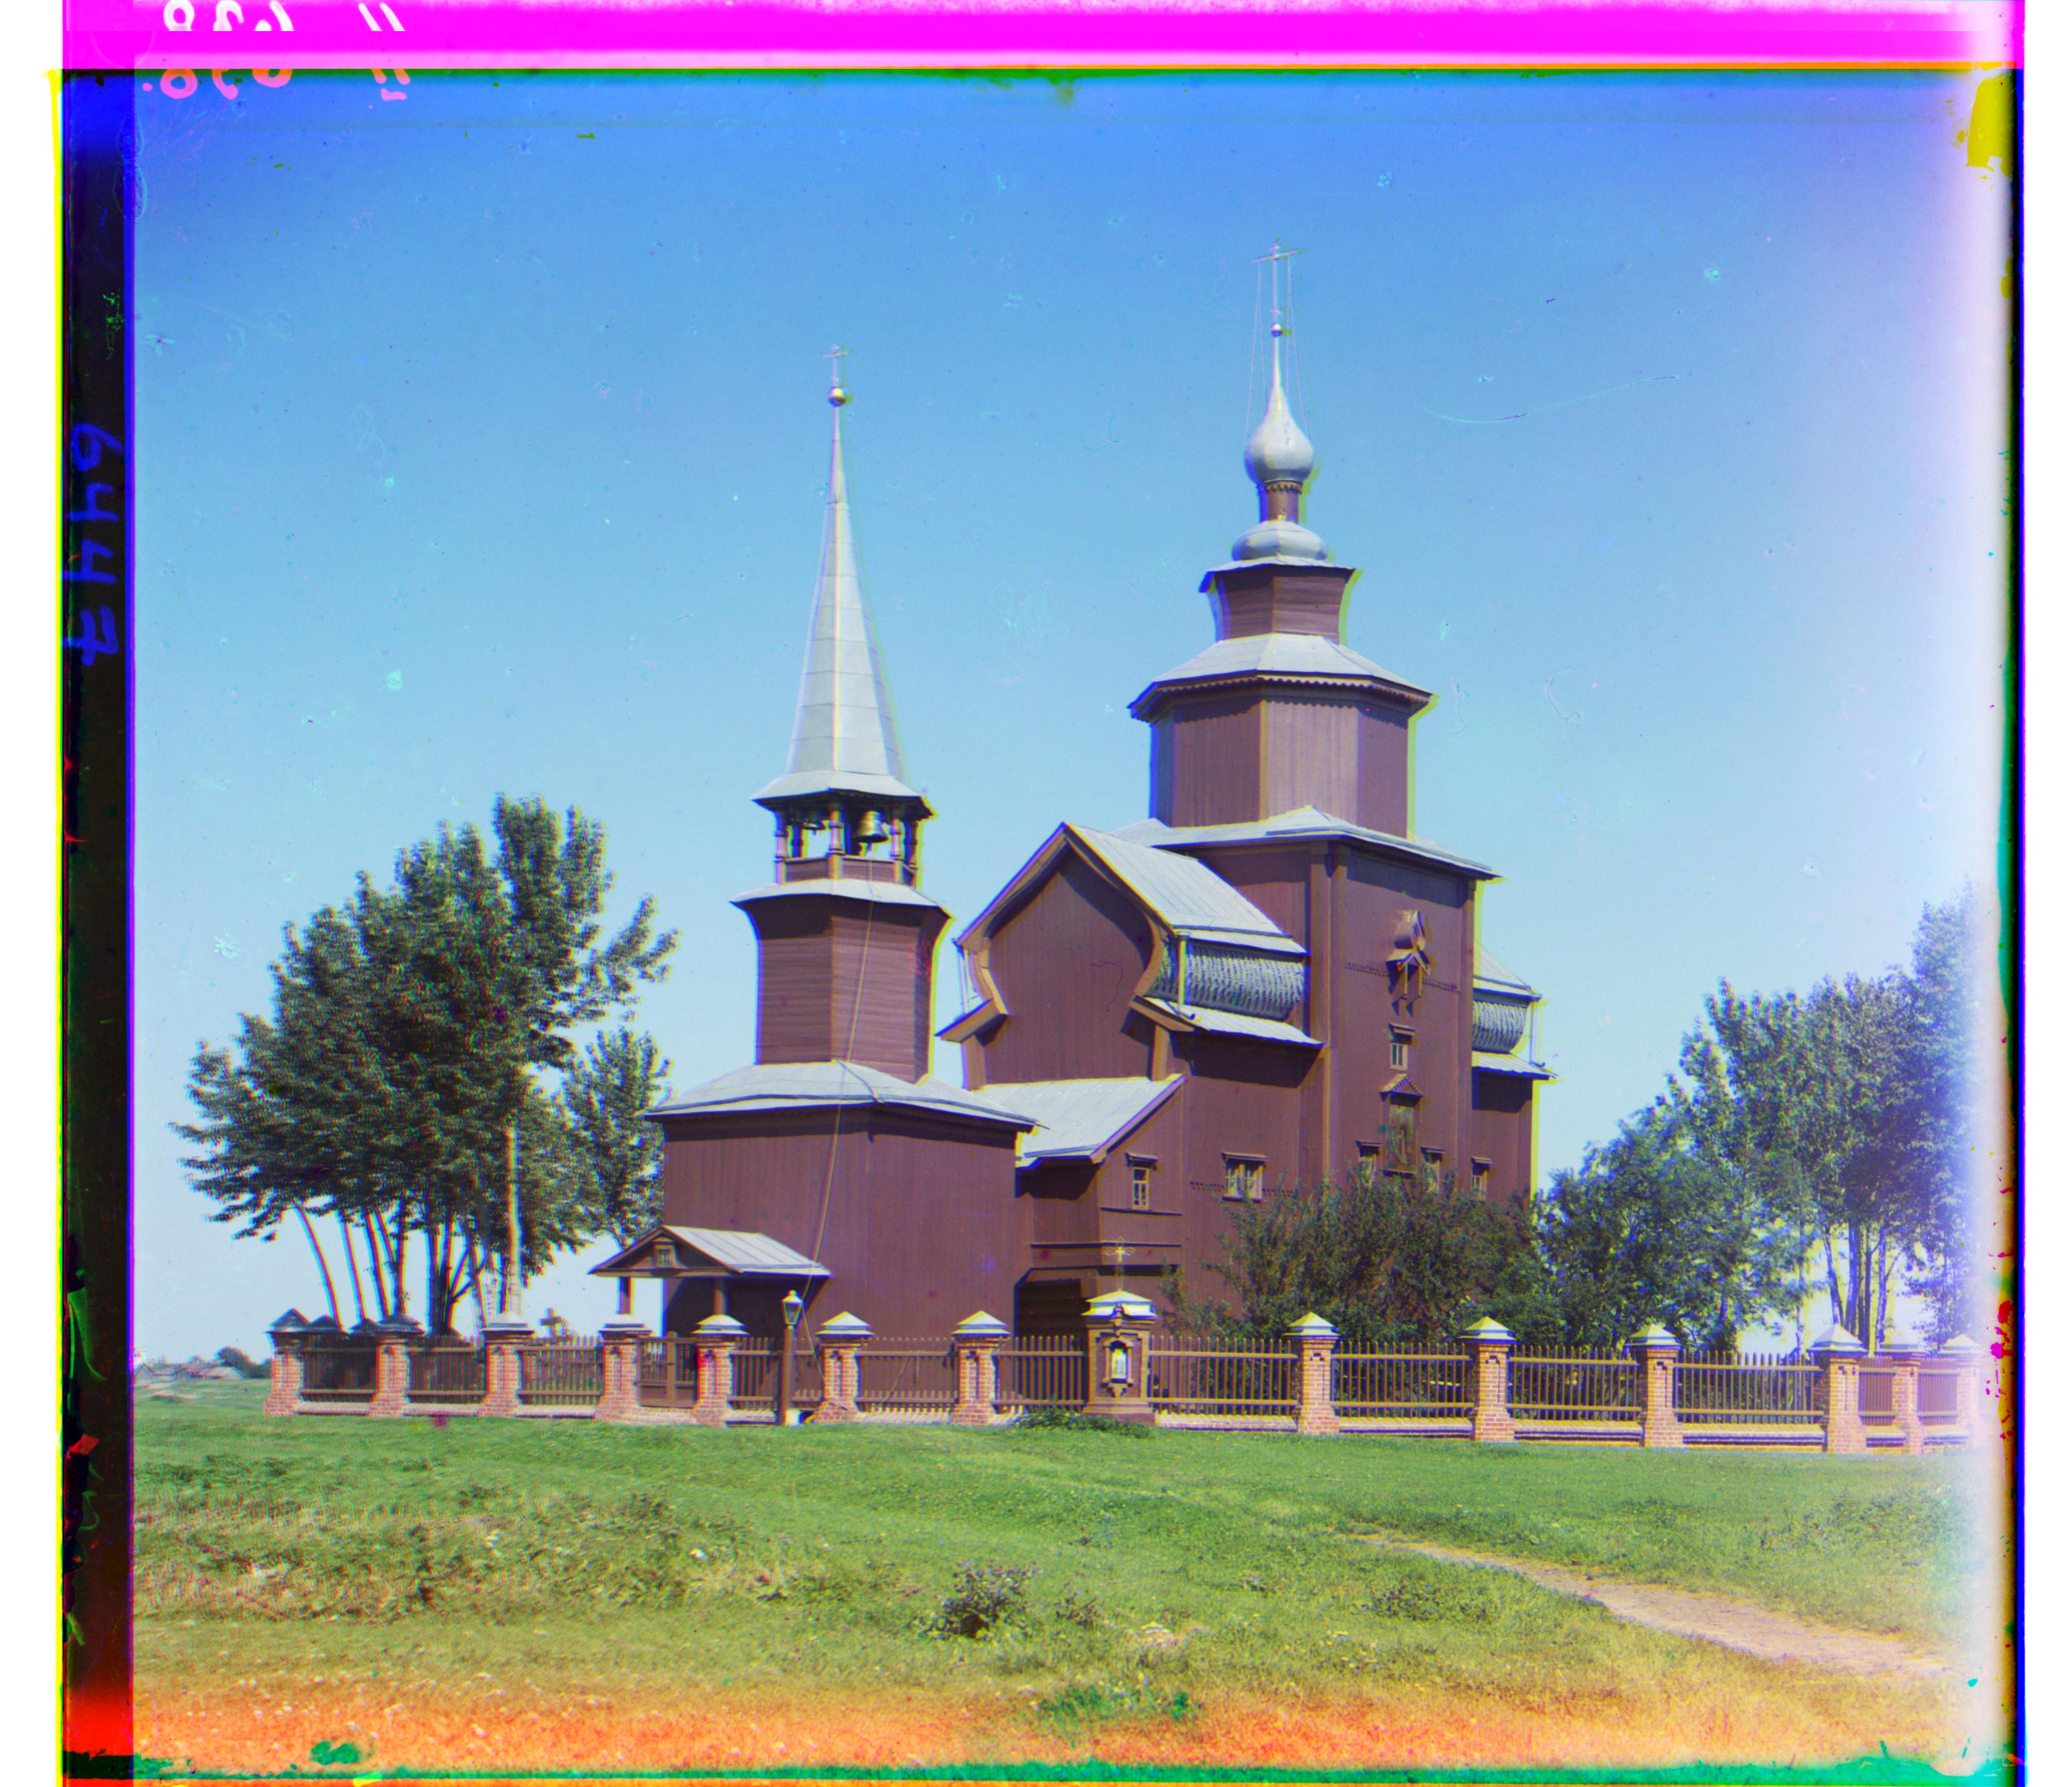 aligned_images/church_aligned_SSD.jpg